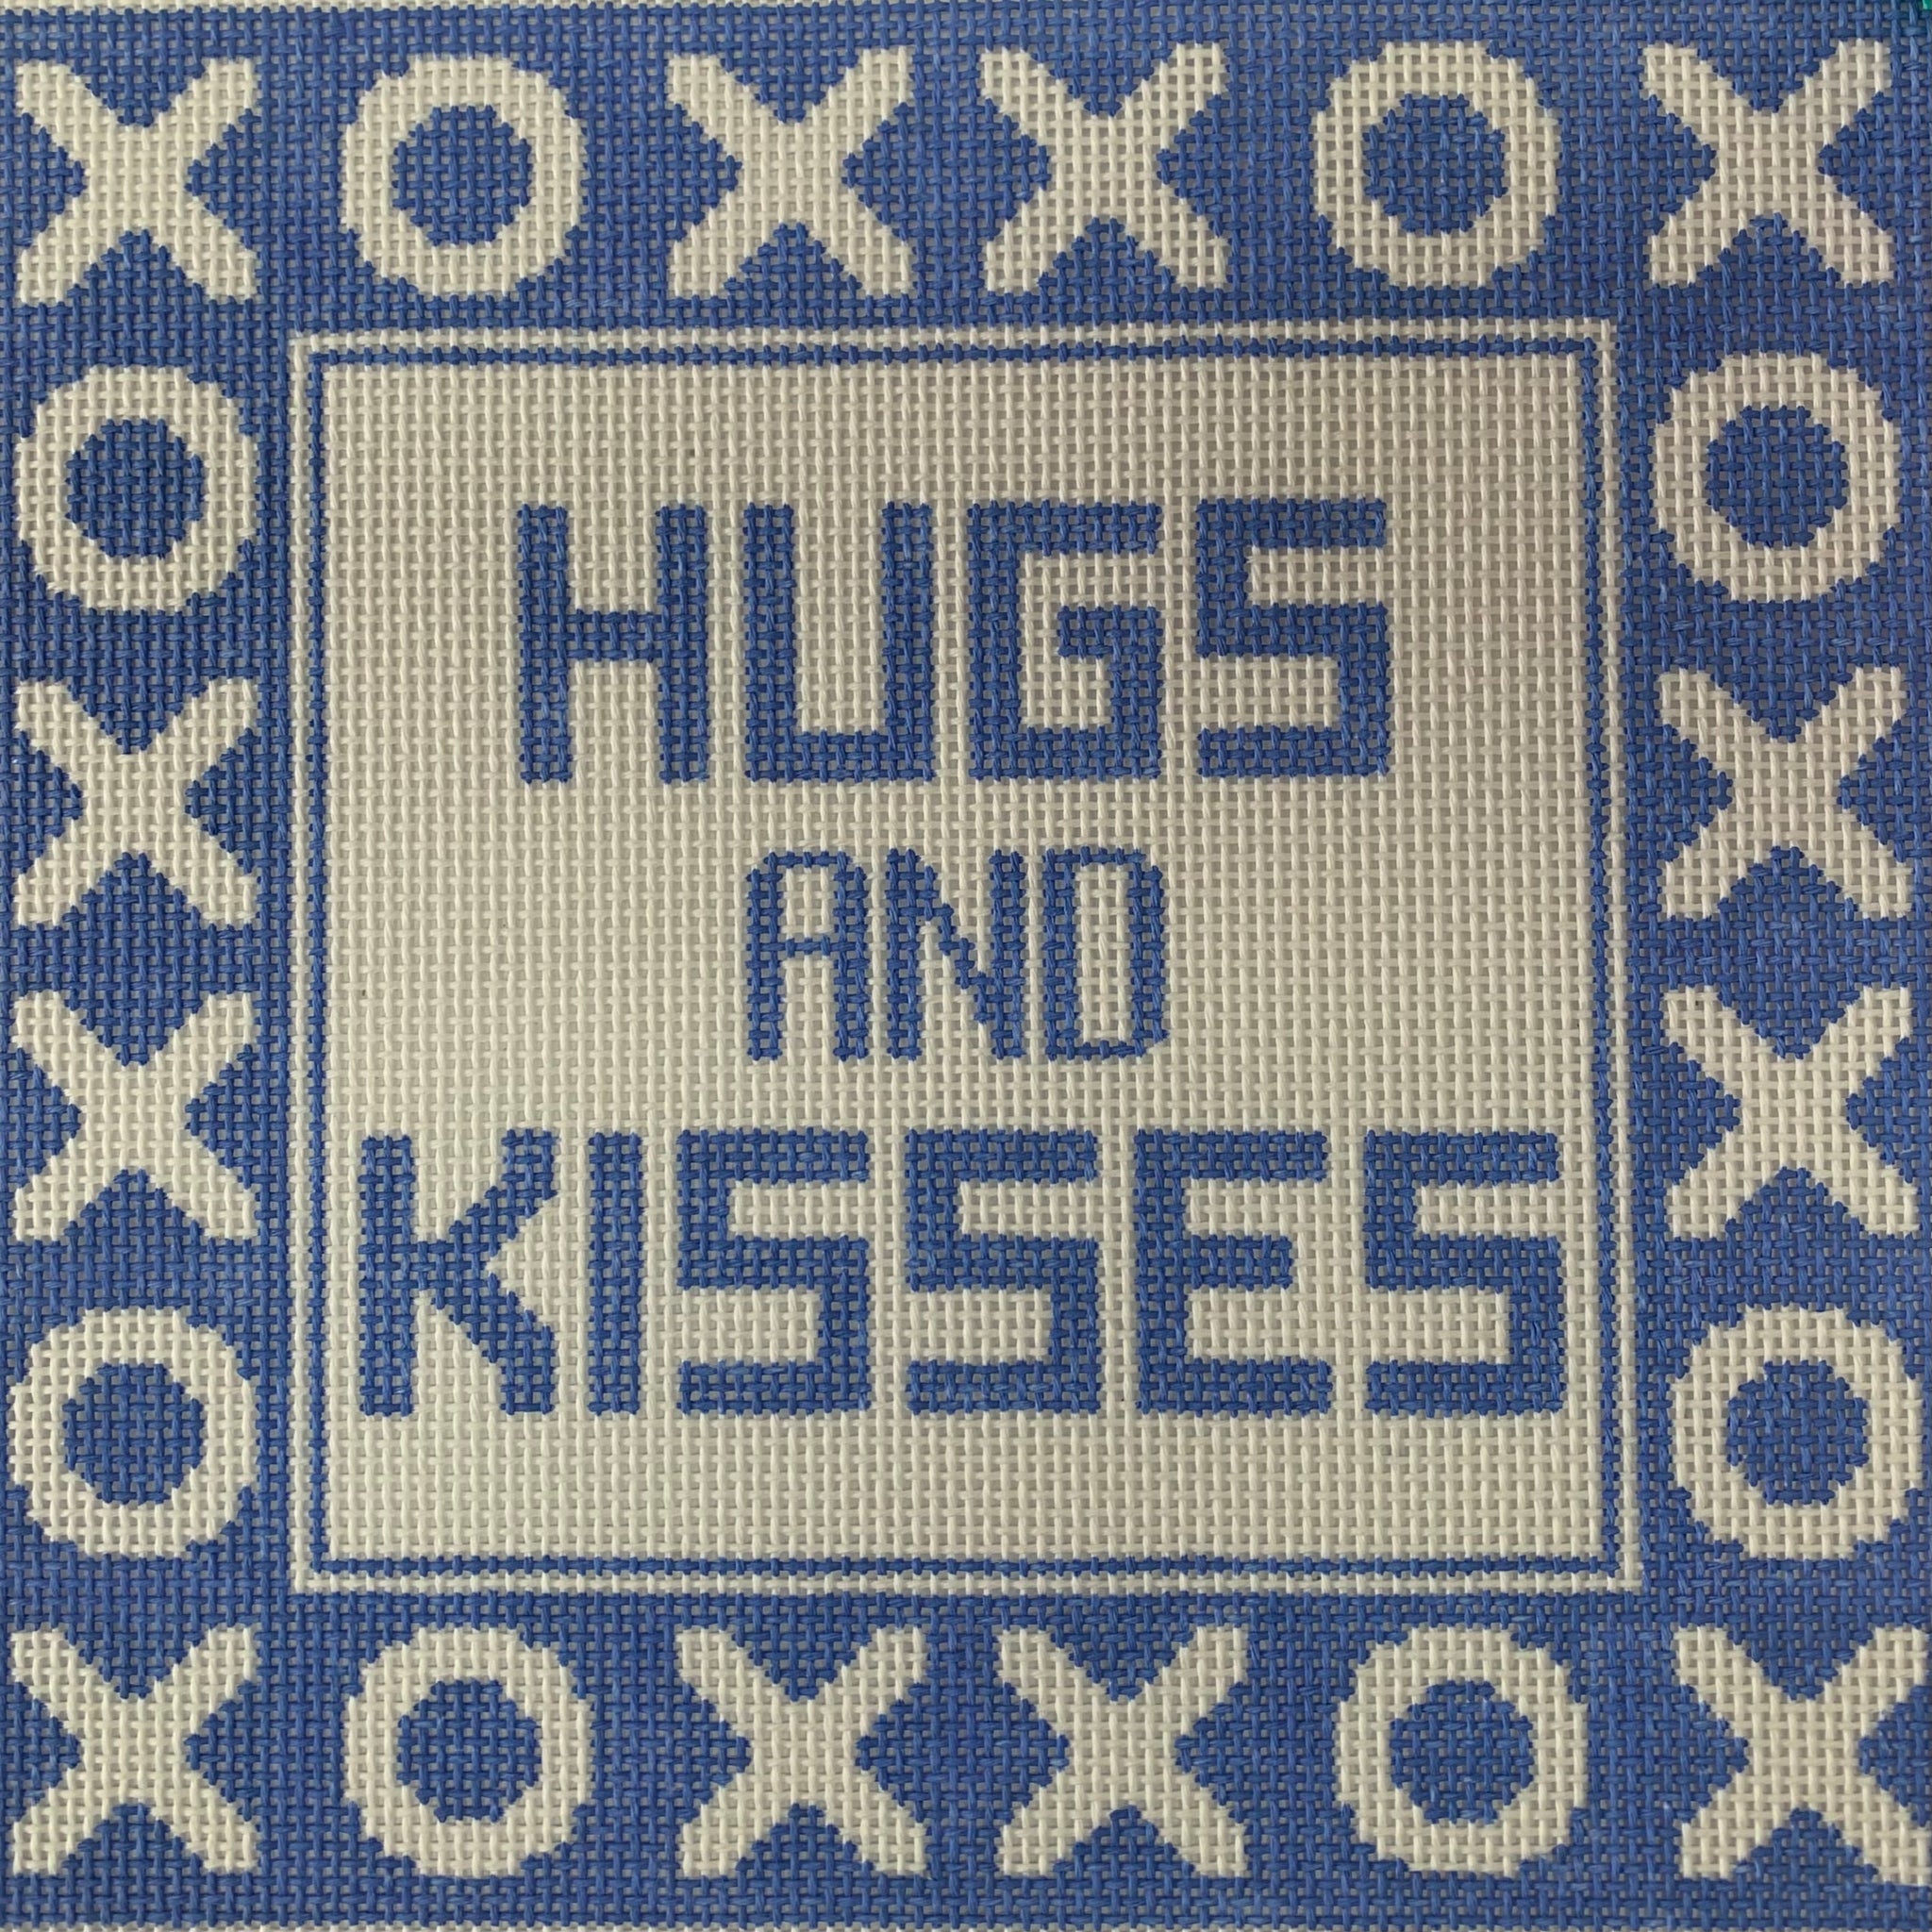 Hugs and Kisses, blue